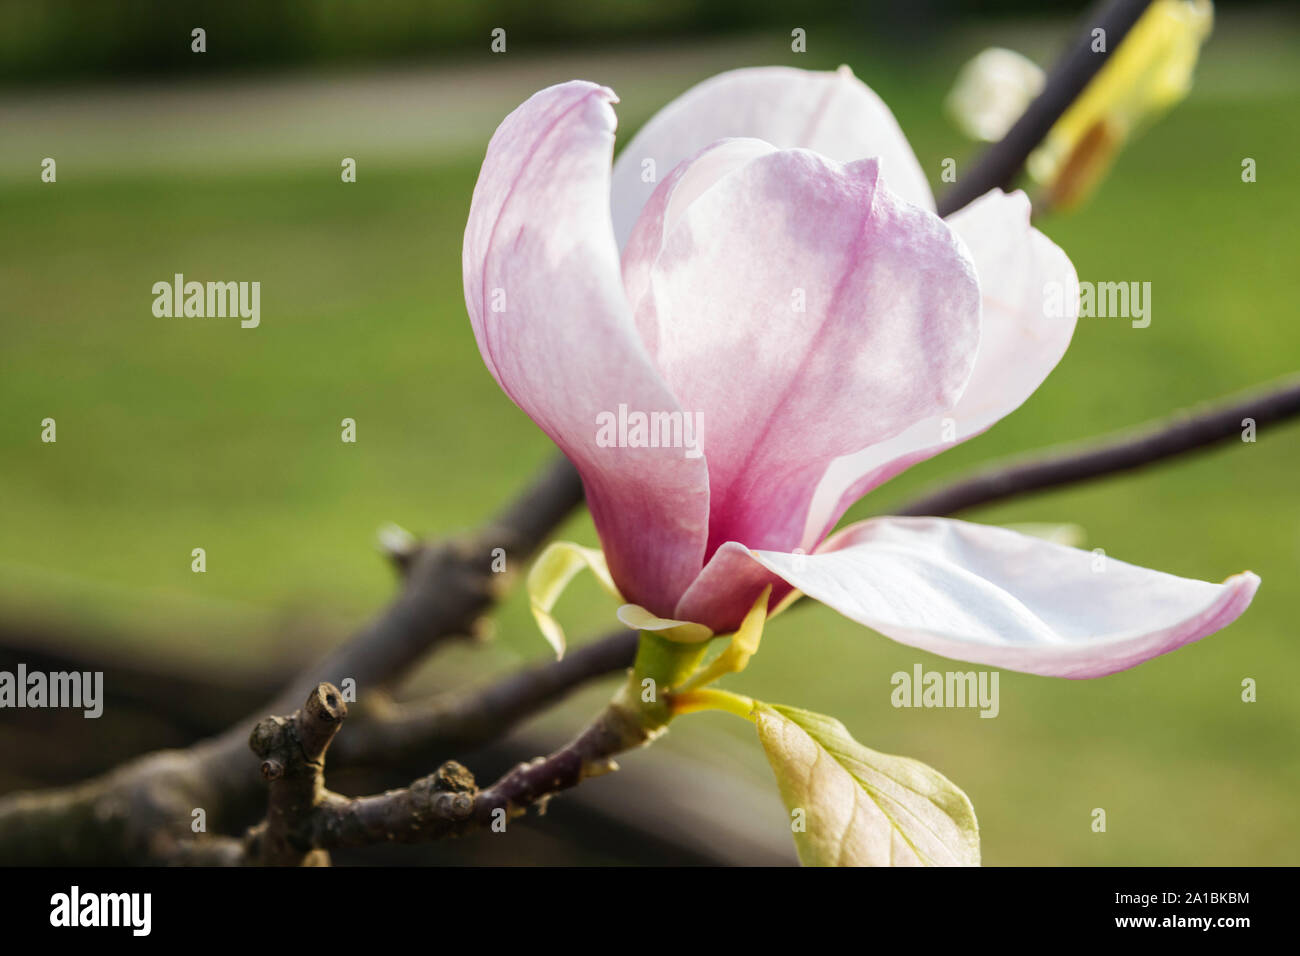 Magnolia spring flower Stock Photo